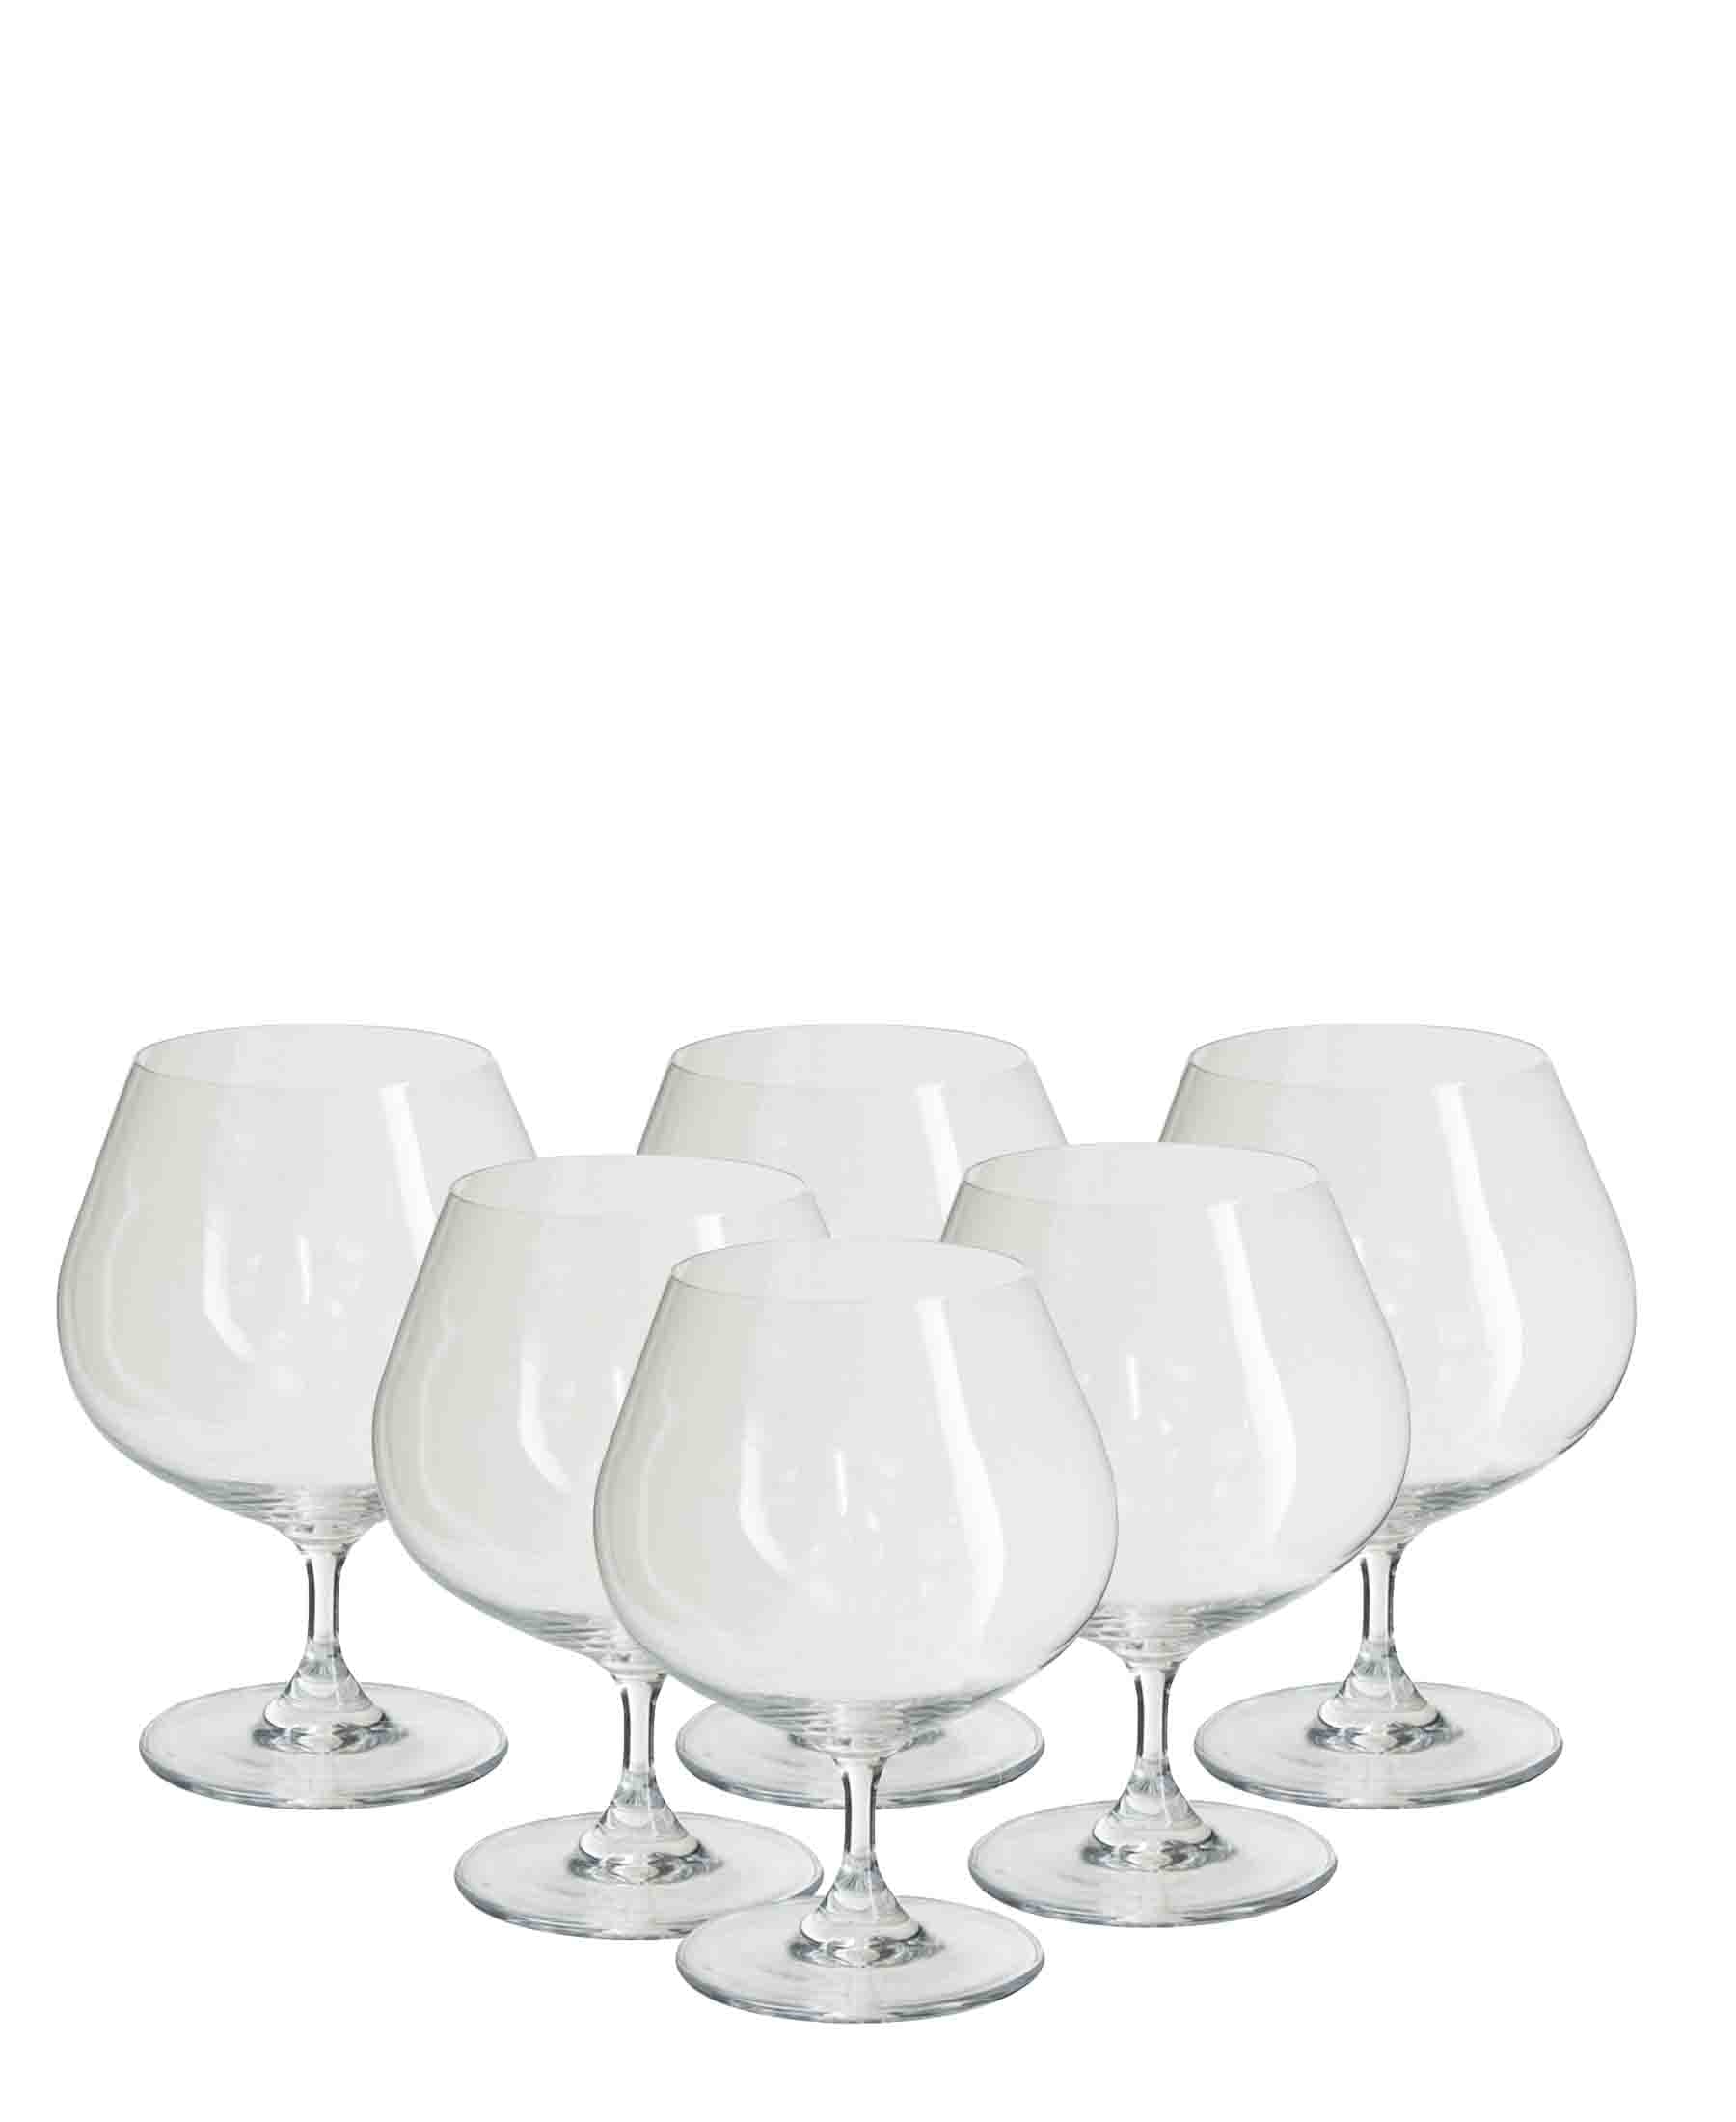 Kitchen Life 6 Piece Rhine Charm Cognac Glass Set - Clear